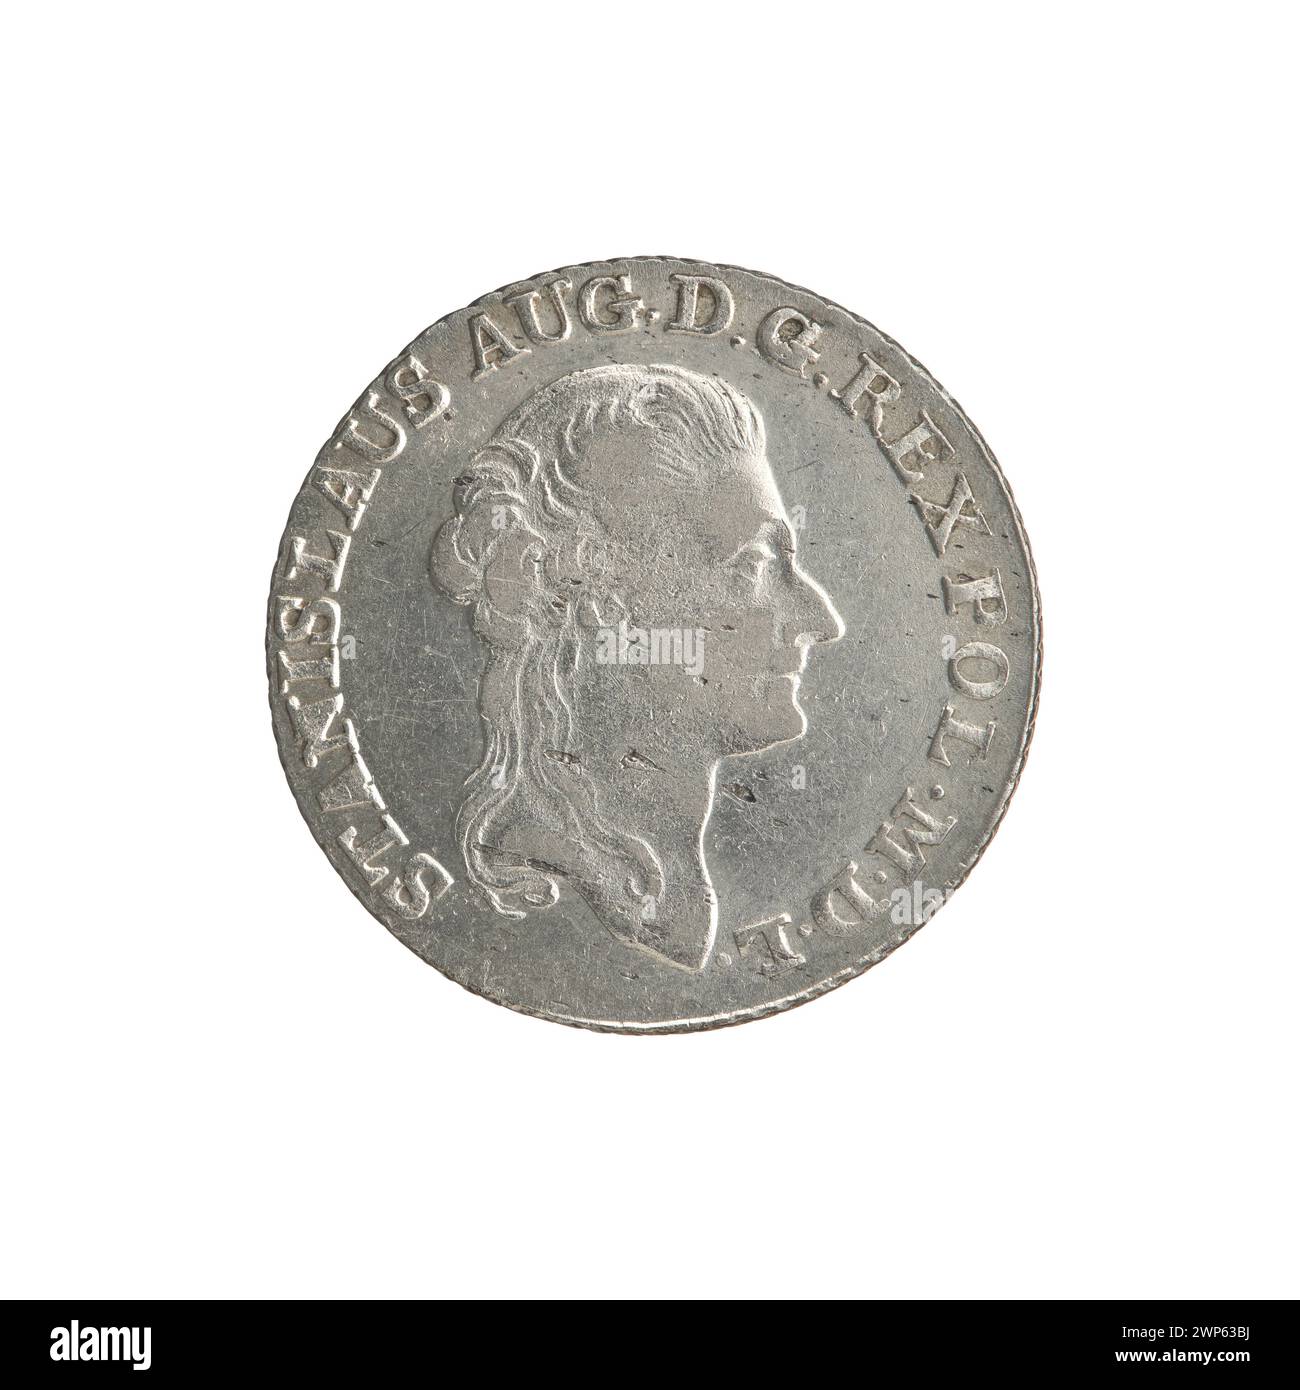 crowning; Stanis Aw August Poniatowski (Polish King; 1764-1795), Brenn, Efraim (Fl. 1774-1792); 1790 (1790-00-00-1790-00-00); Stock Photo